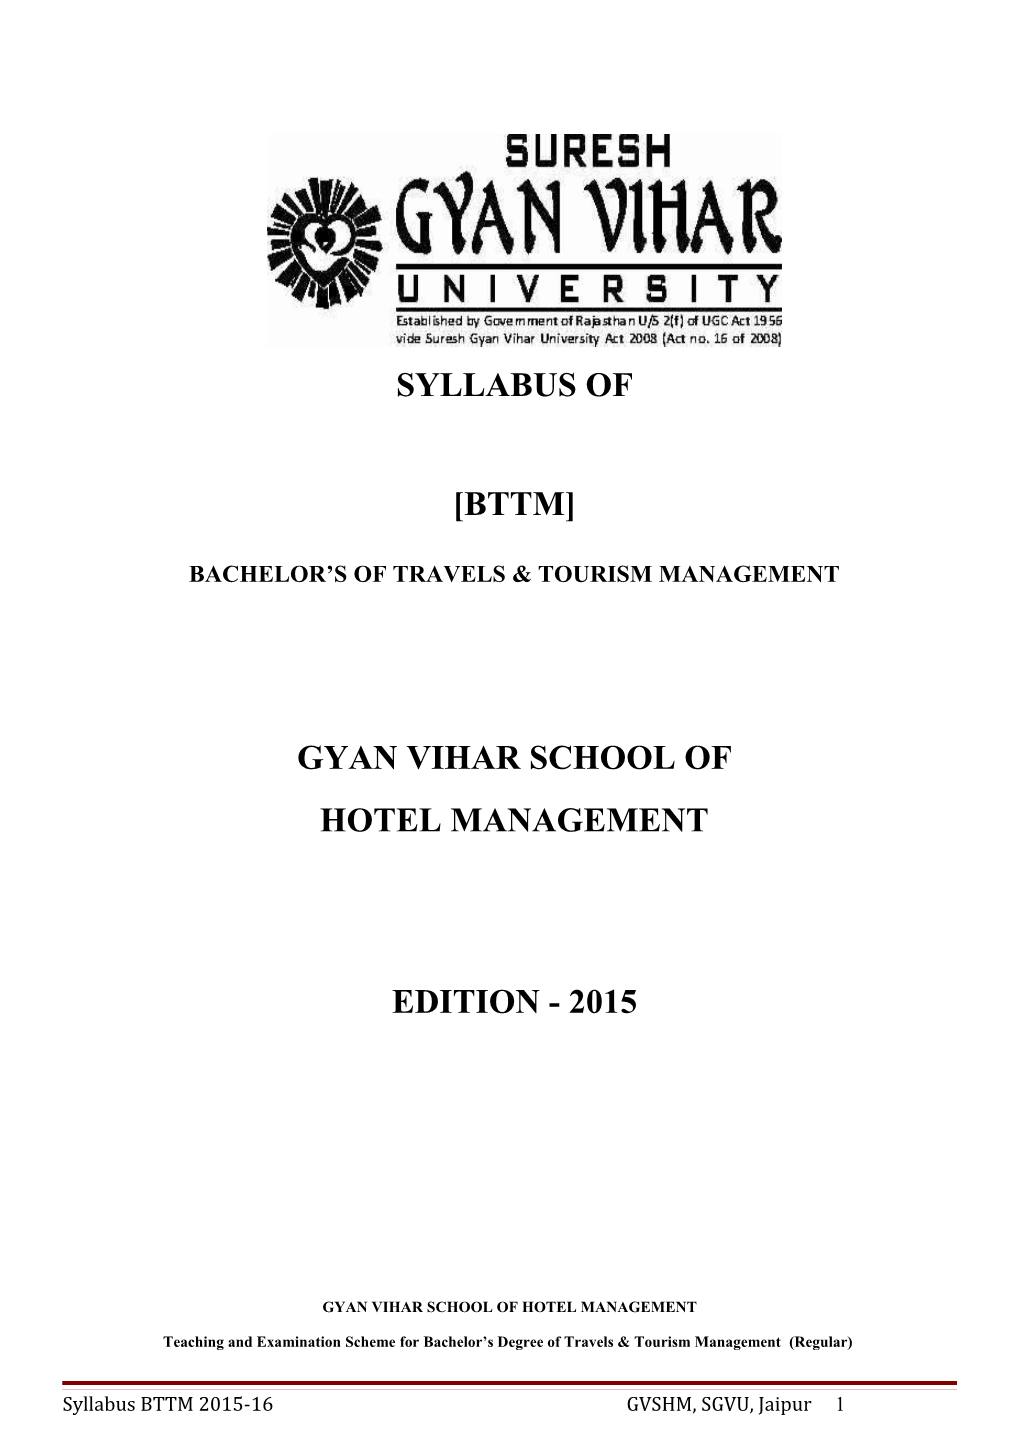 Gyan Vihar School of Hotel Management